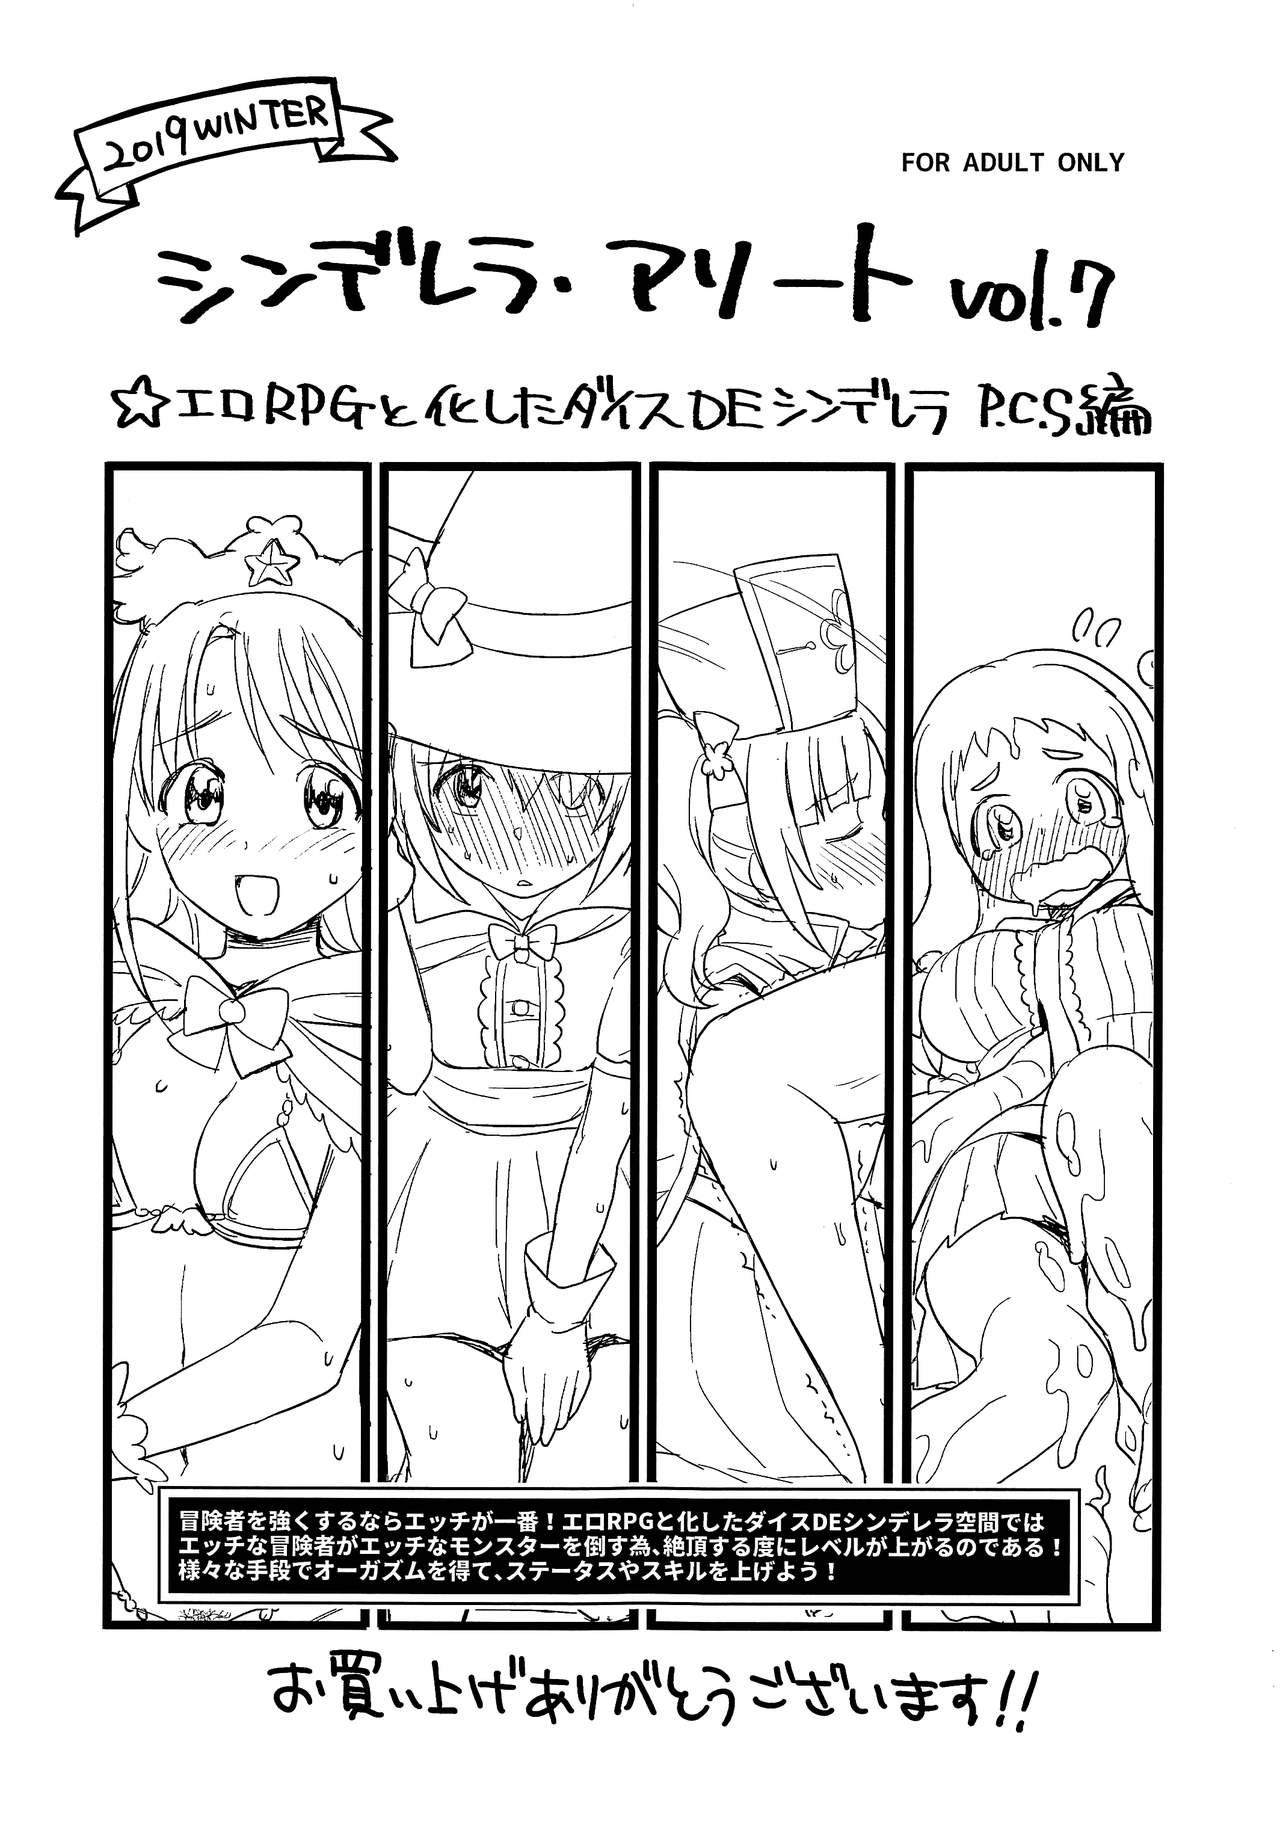 Cinderella Assort vol. 7 Ero RPG to kashita Dice DE Cinderella P.C.S Hen 1